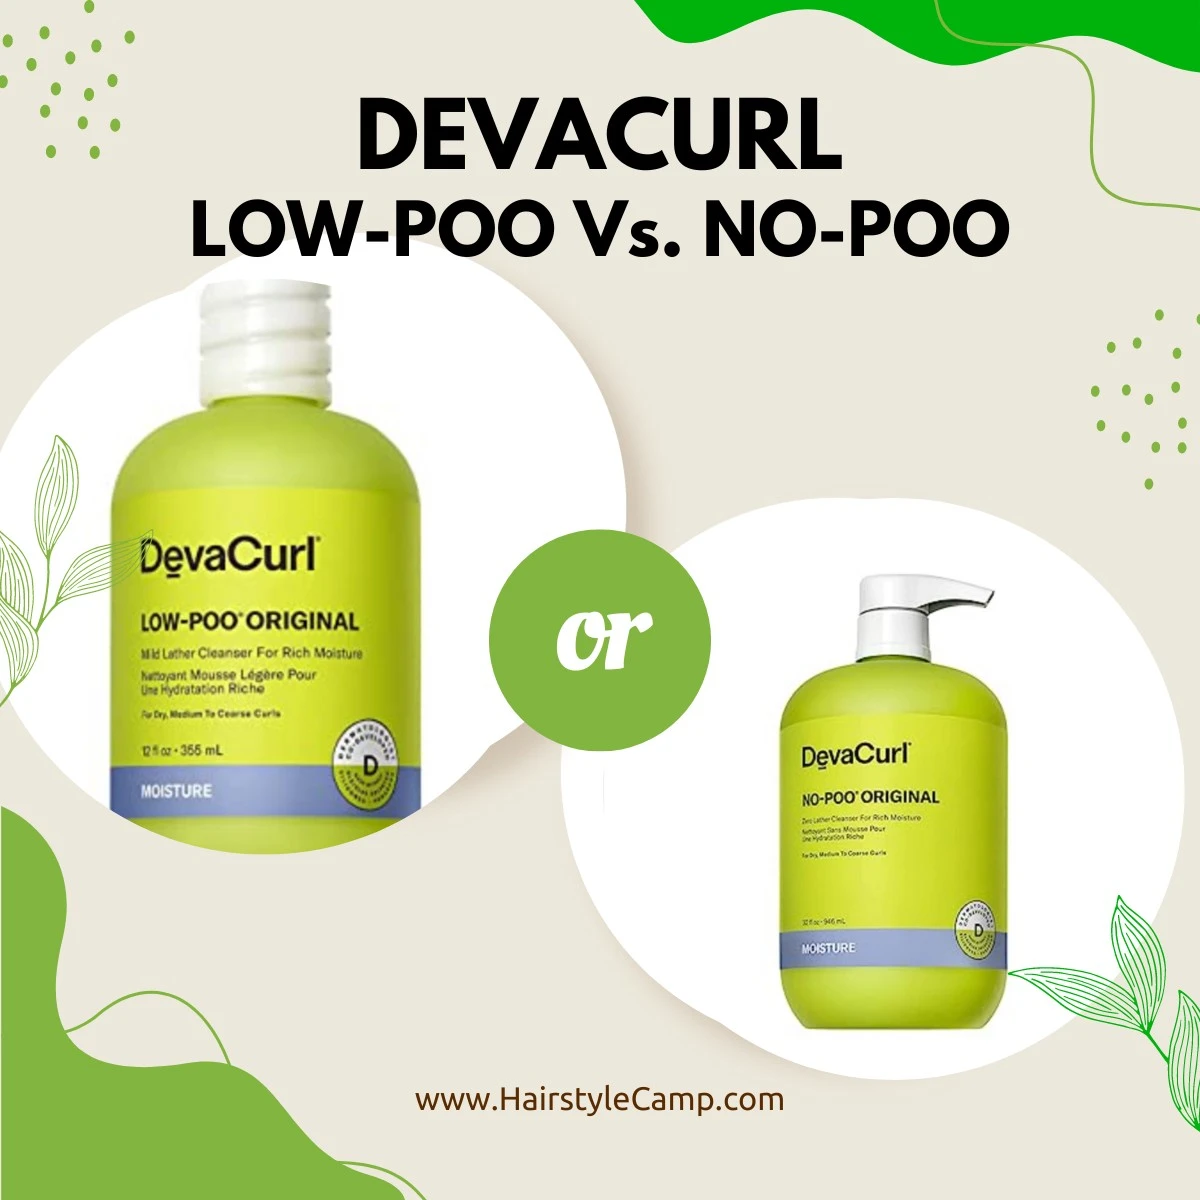 DevaCurl Low-Poo vs No-Poo